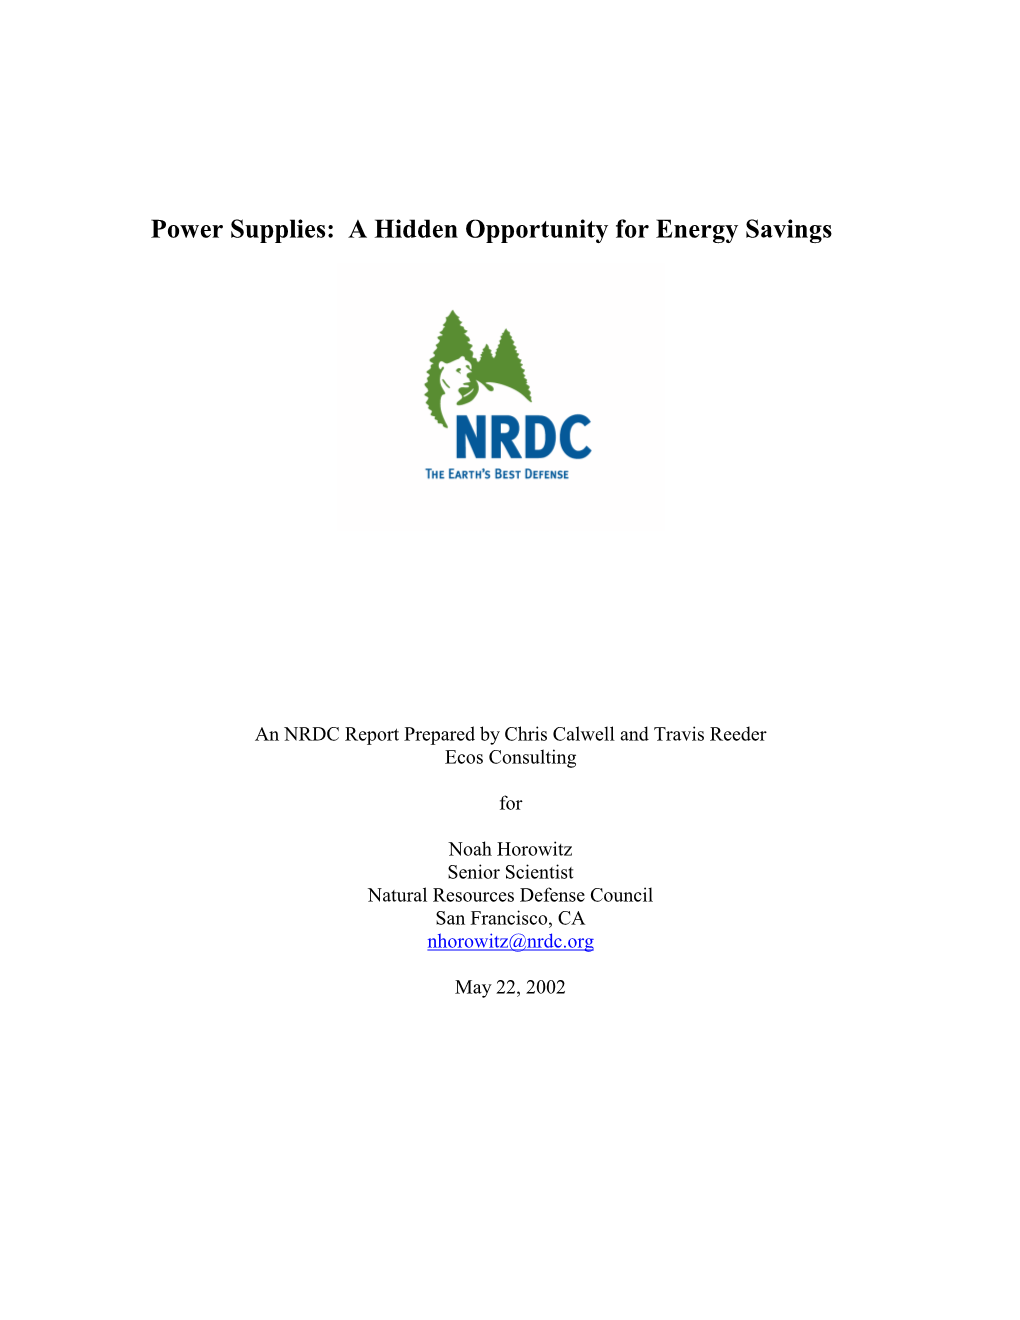 Power Supplies: a Hidden Opportunity for Energy Savings